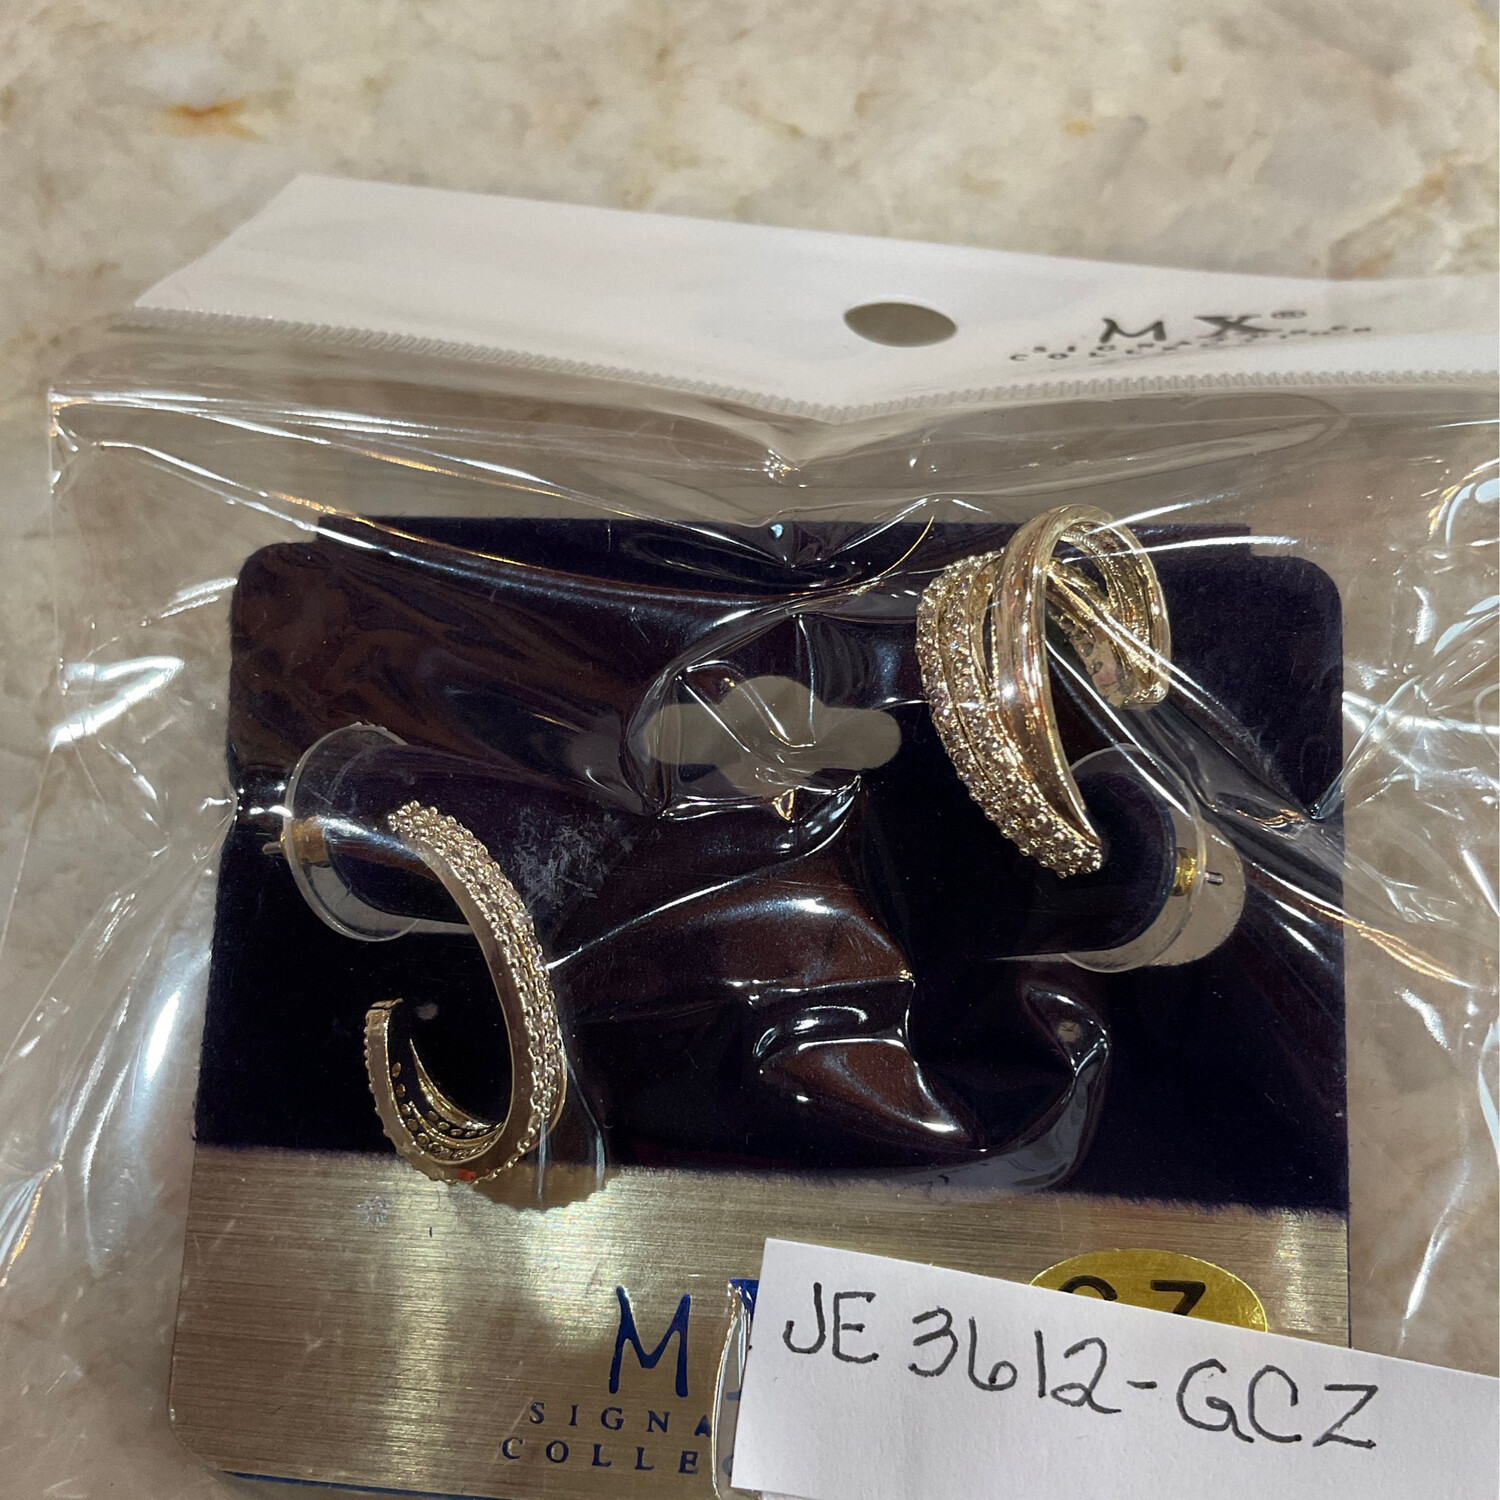 Fossick Imports JE3612-GCZ Small Gold CZ Split Hoop Earring 